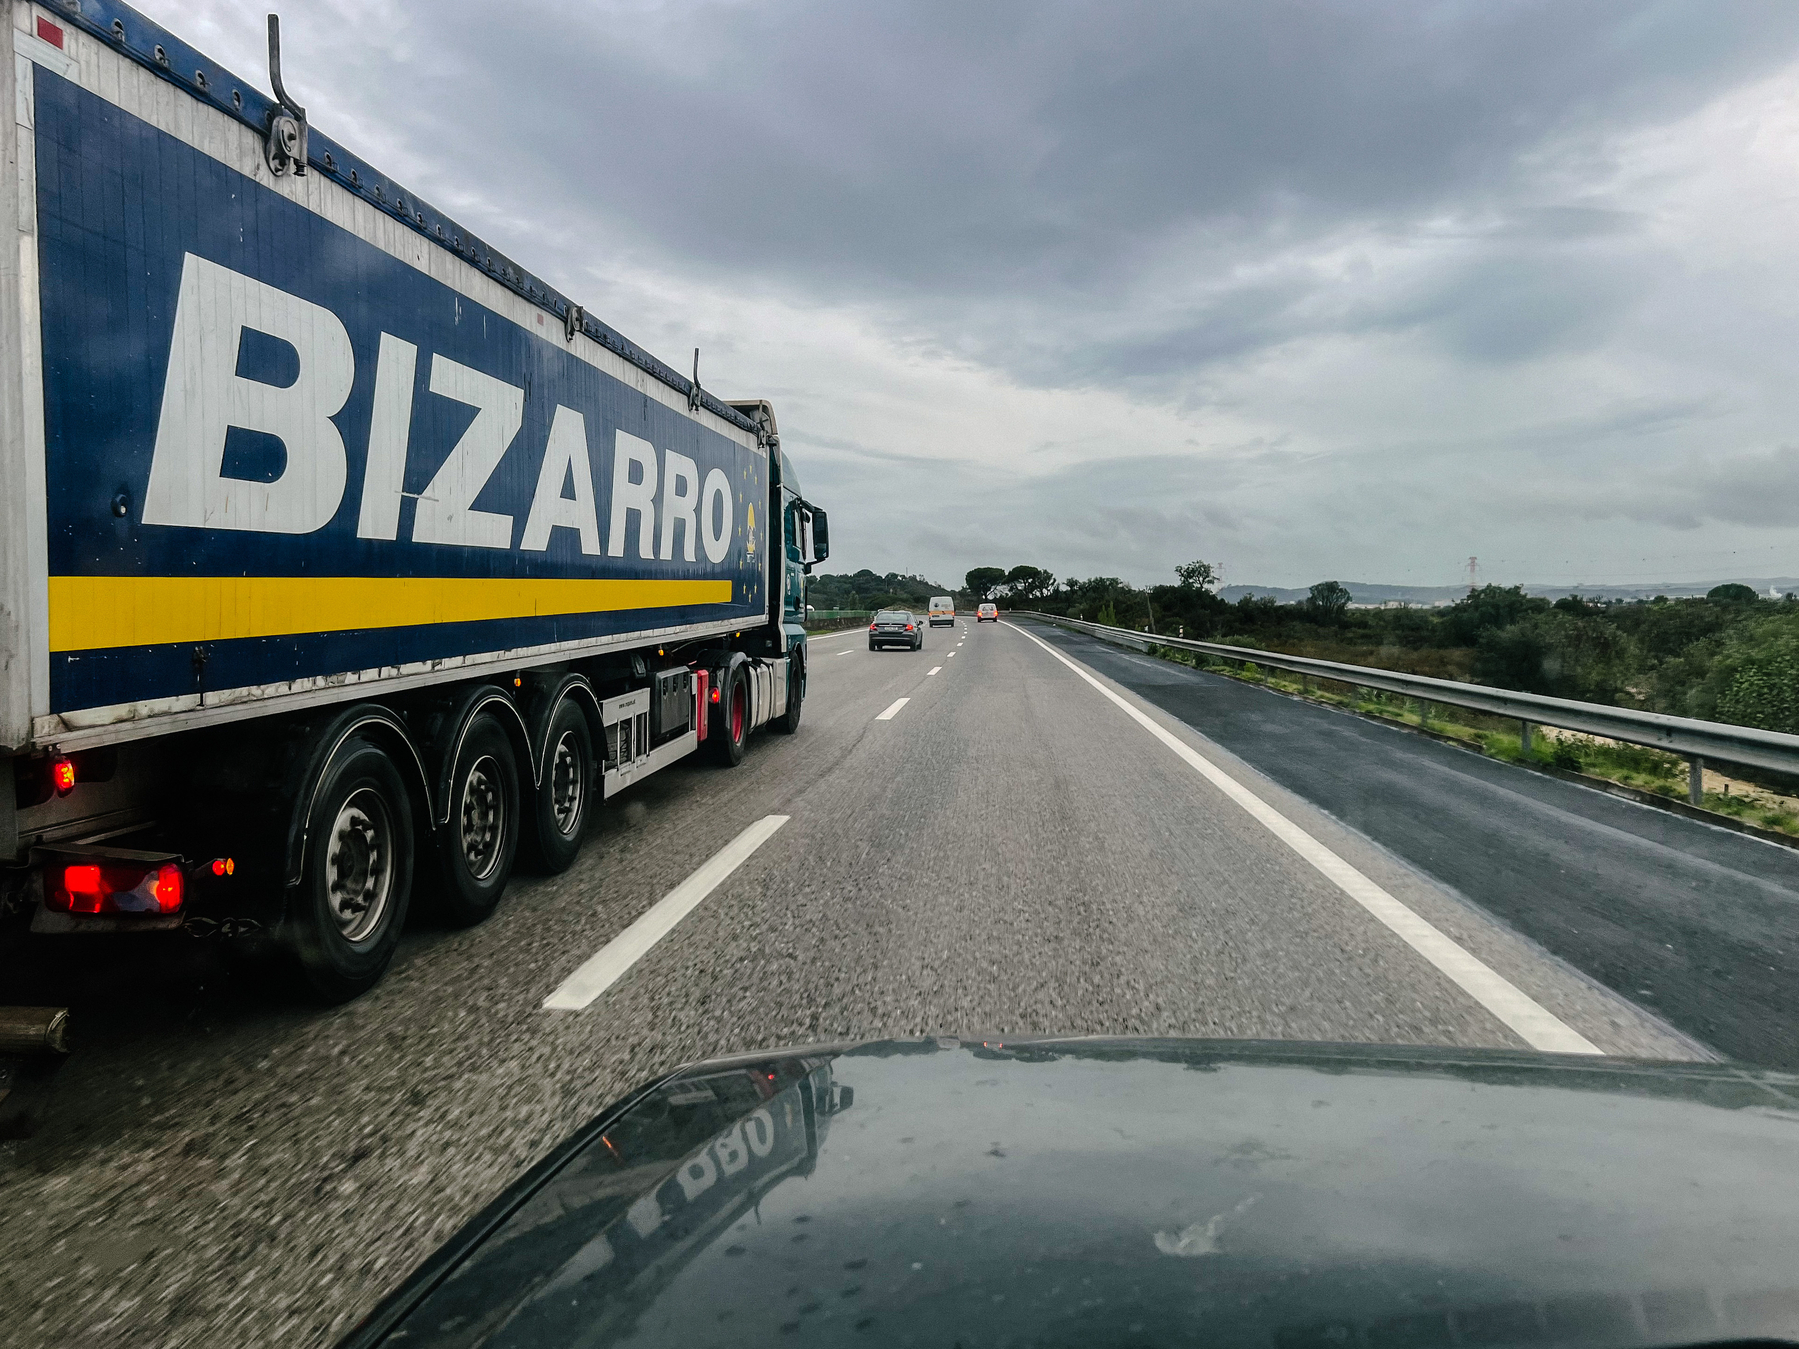 A huge truck on the highway, “Bizarro” written on the side 